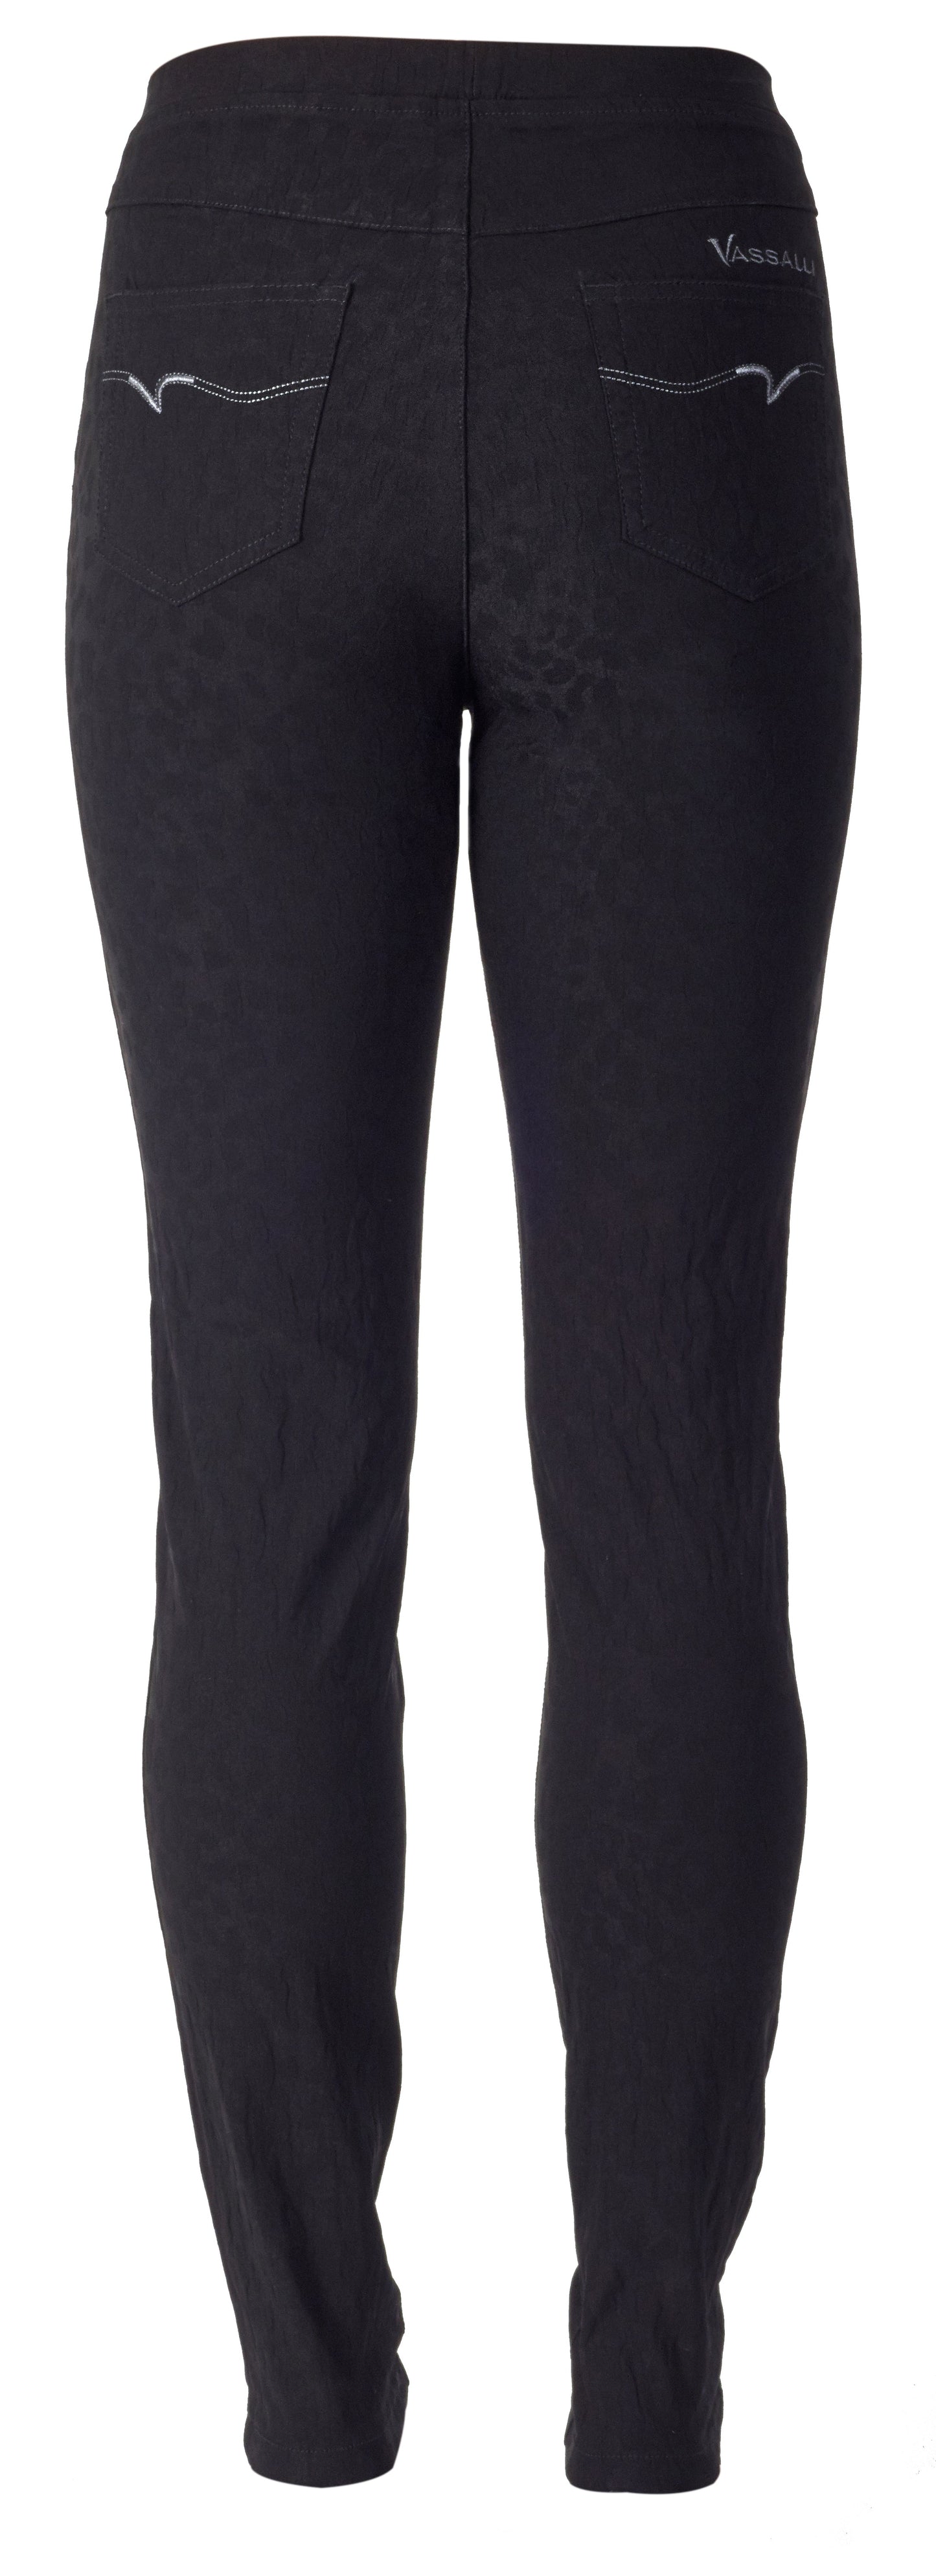 Vassalli Embossed Pull On Skinny Fit  - Self Pattern Pant - Style 230AF - 5 Colourways - INSTORE